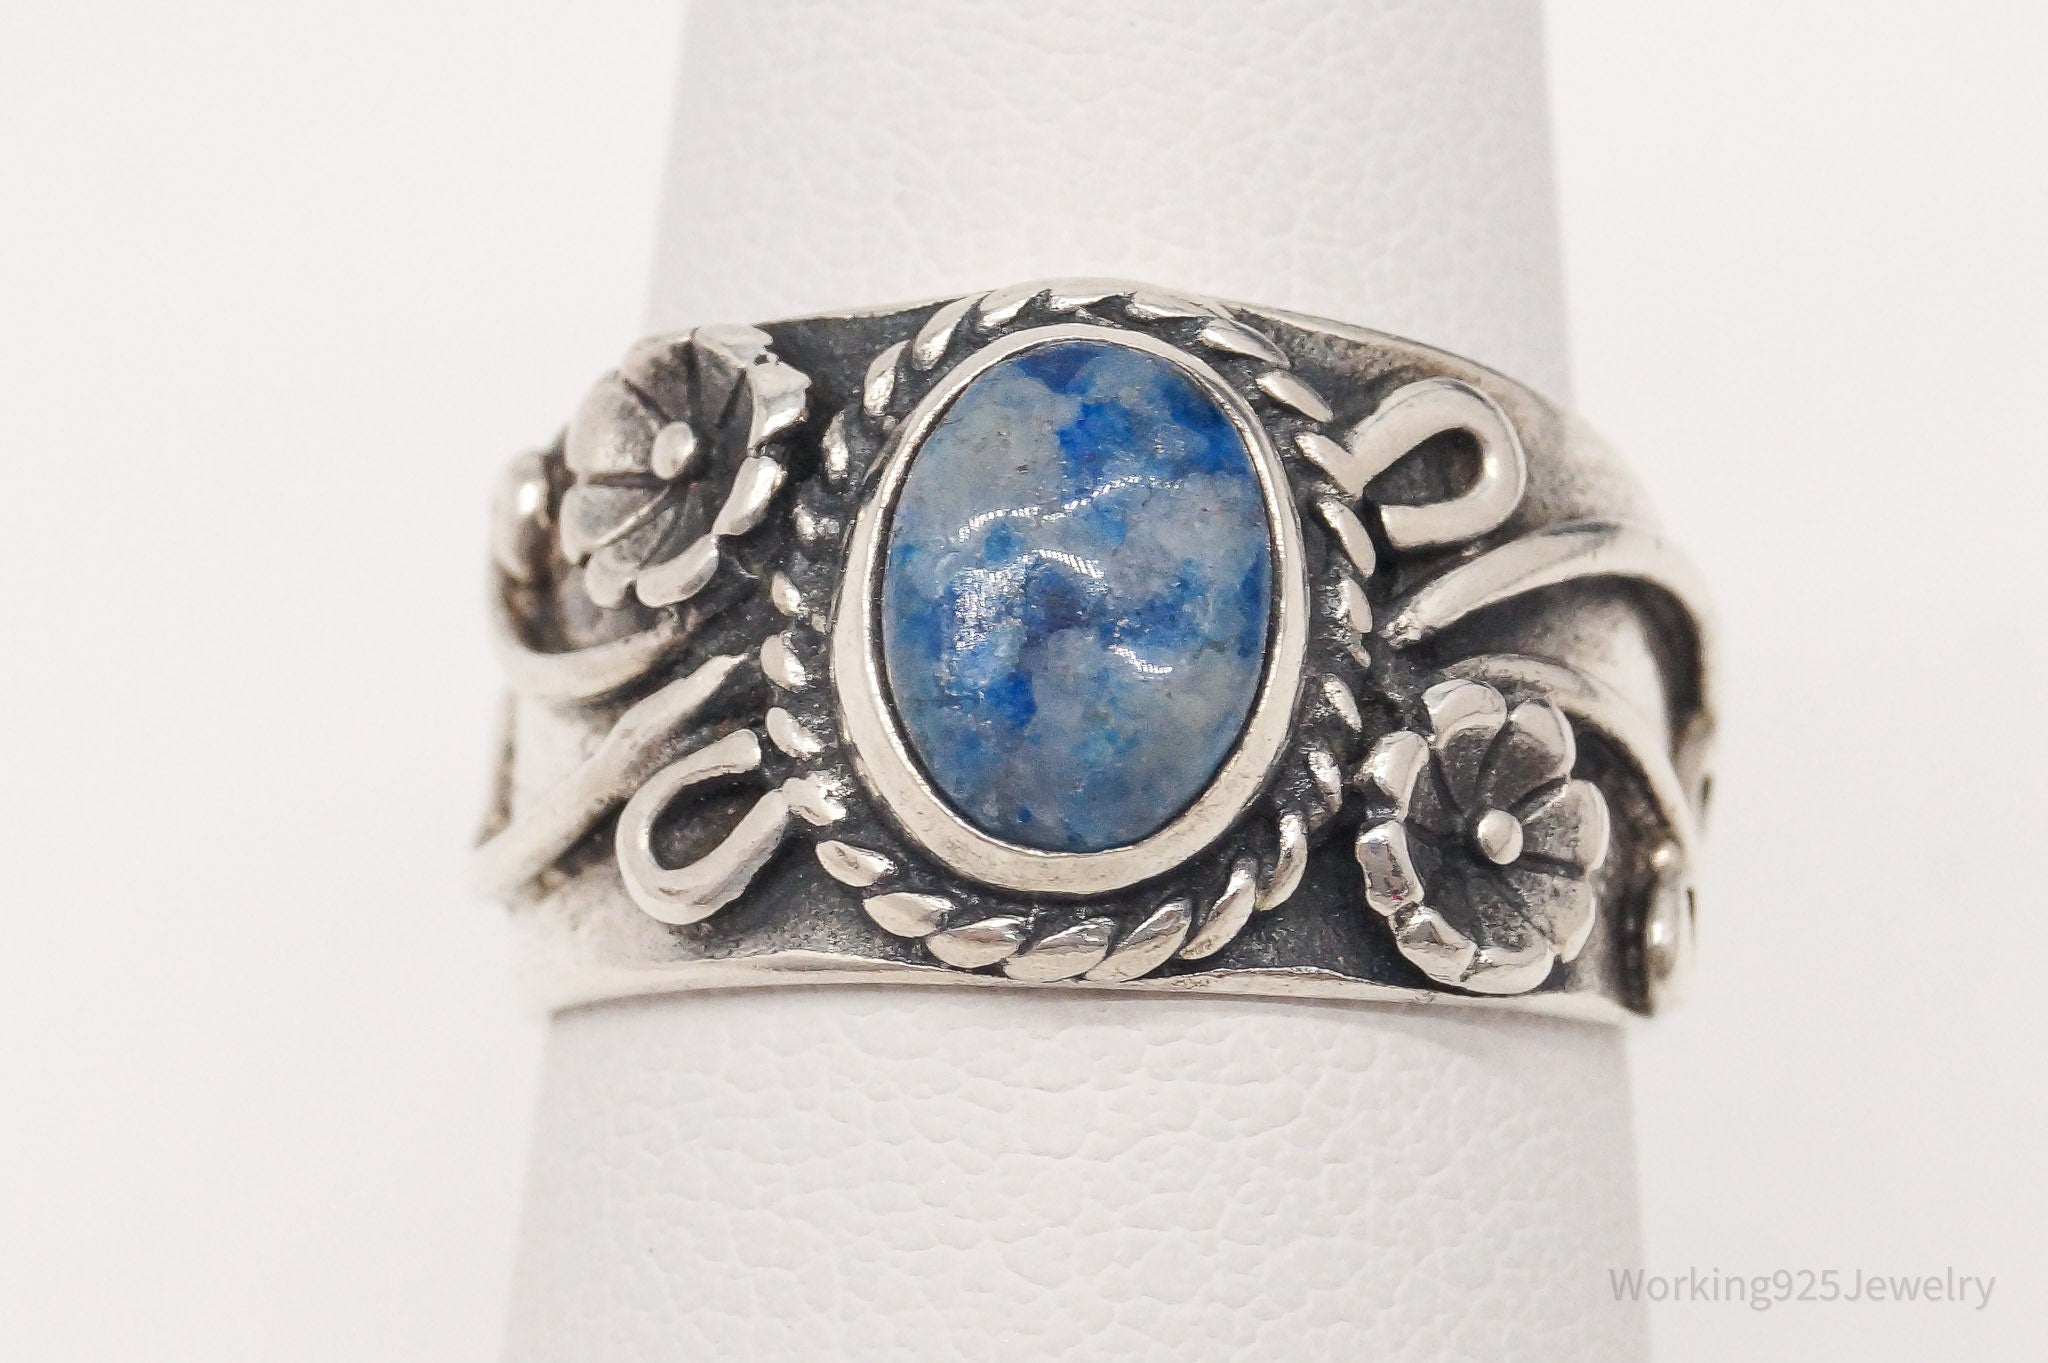 VTG Southwestern Carolyn Pollack Lapis Lazuli Sterling Silver Ring Size 6.25